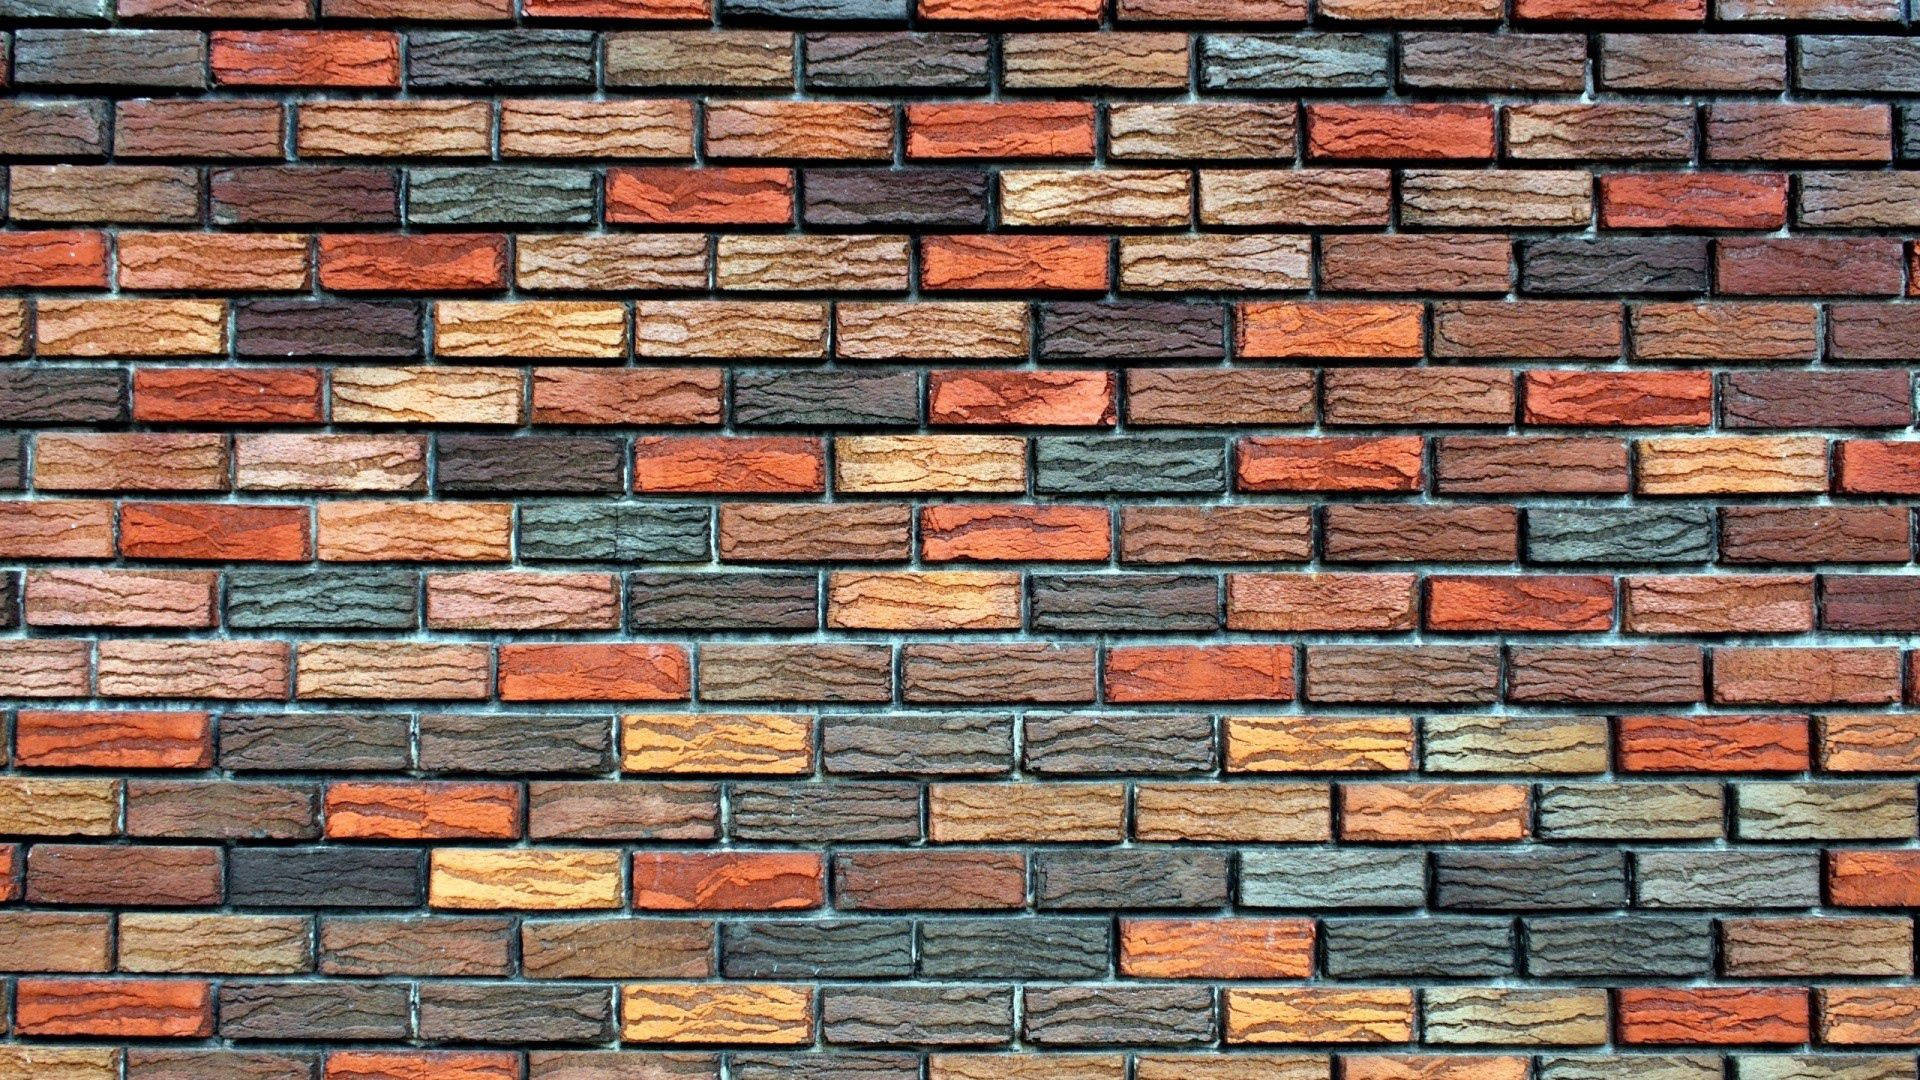 Free Brick Wallpaper Downloads, Brick Wallpaper for FREE